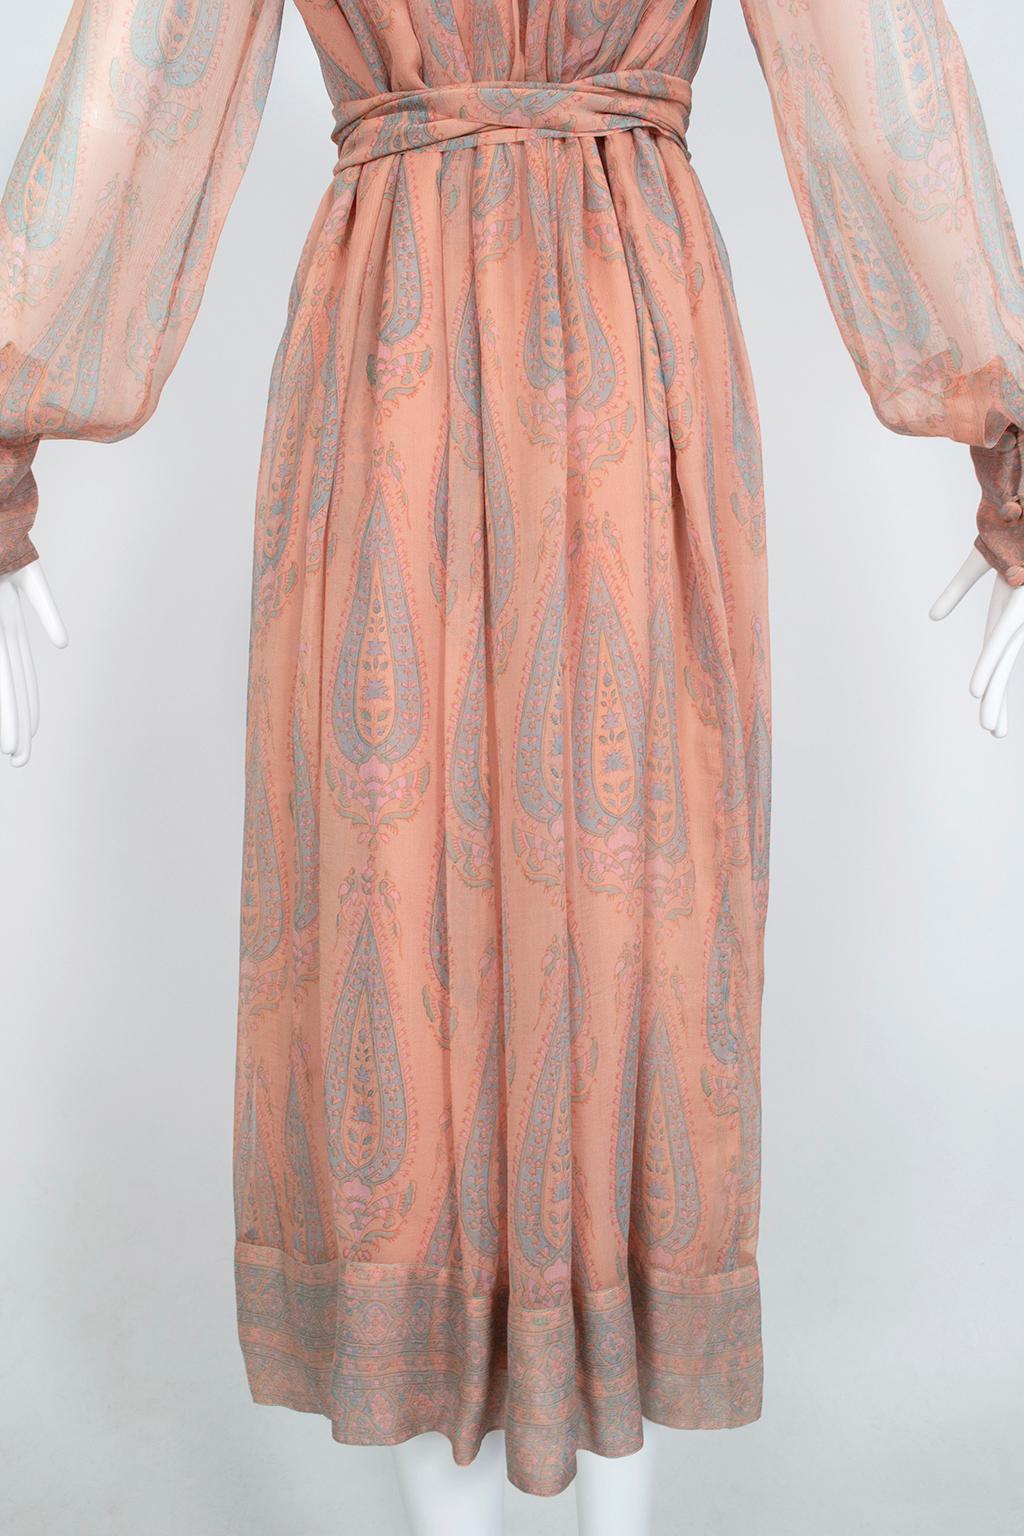 Treacy Lowe Bohemian Peach Paisley Smocked Silk Midi Dress - M-L, 1970s For Sale 8